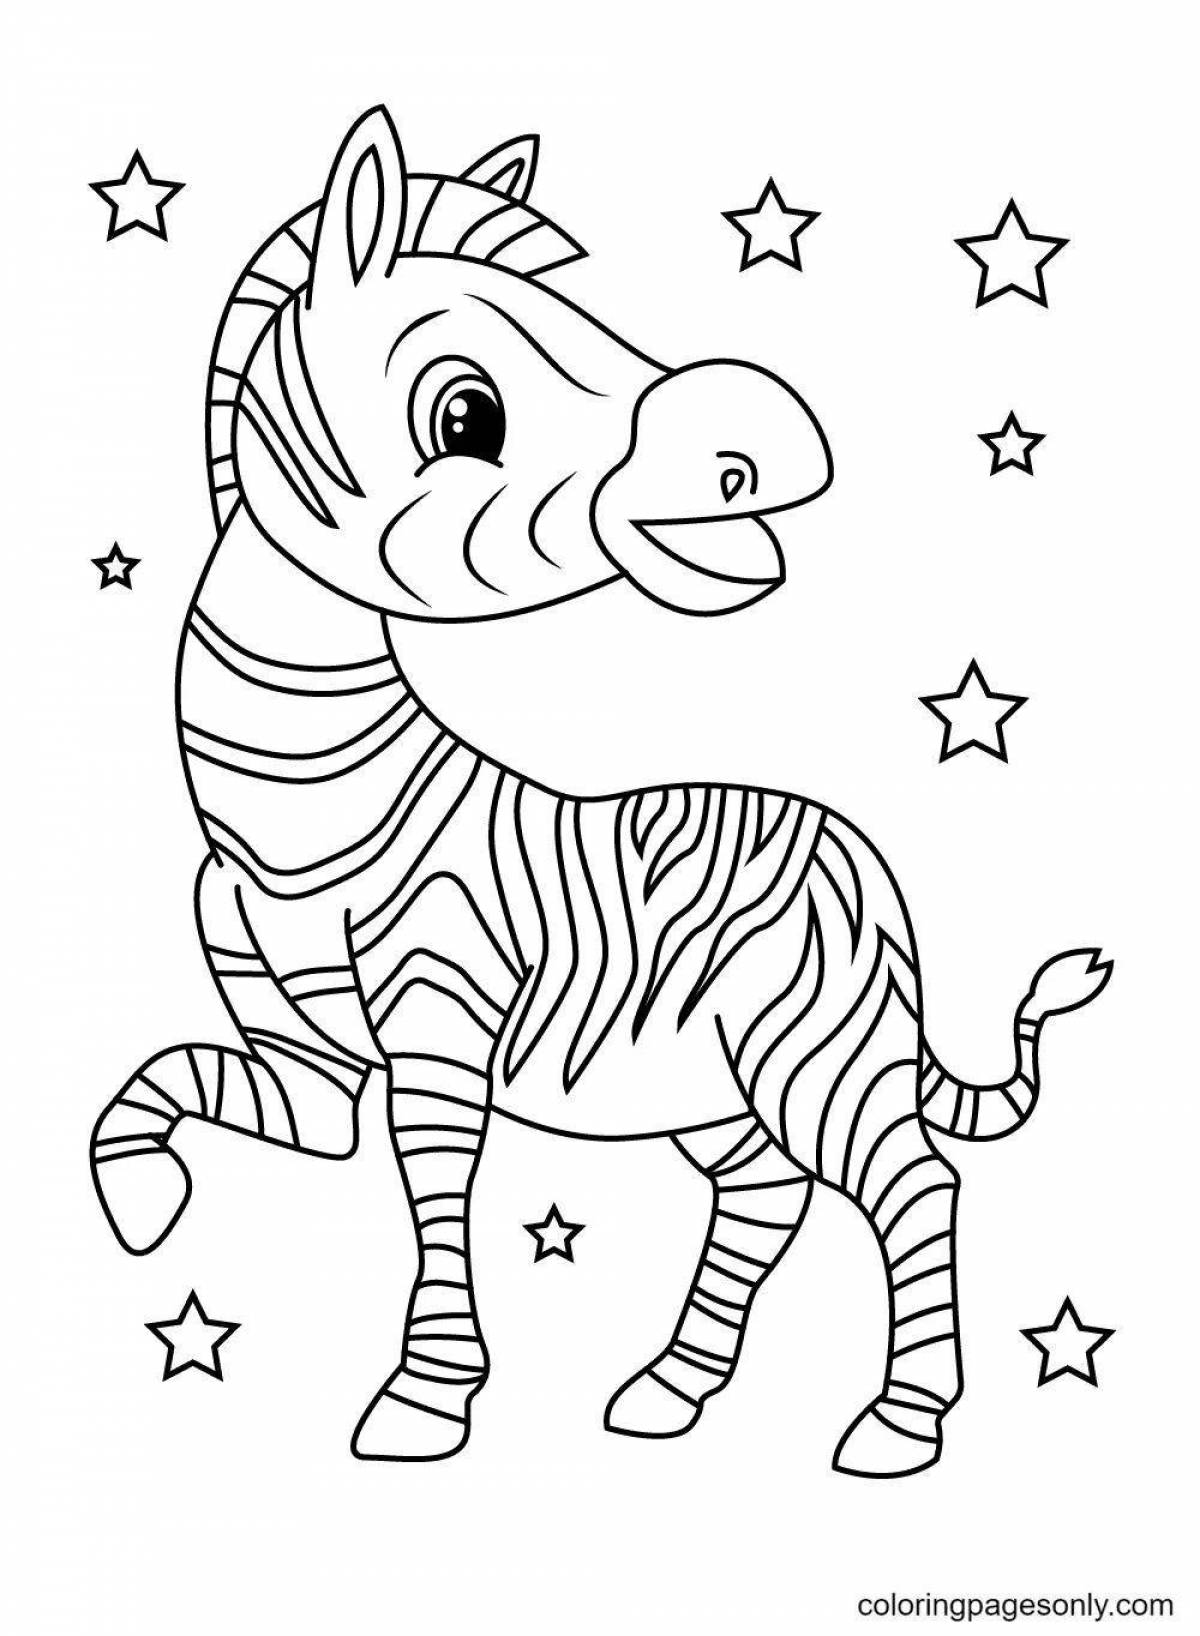 Coloring book joyful zebra for children 3-4 years old